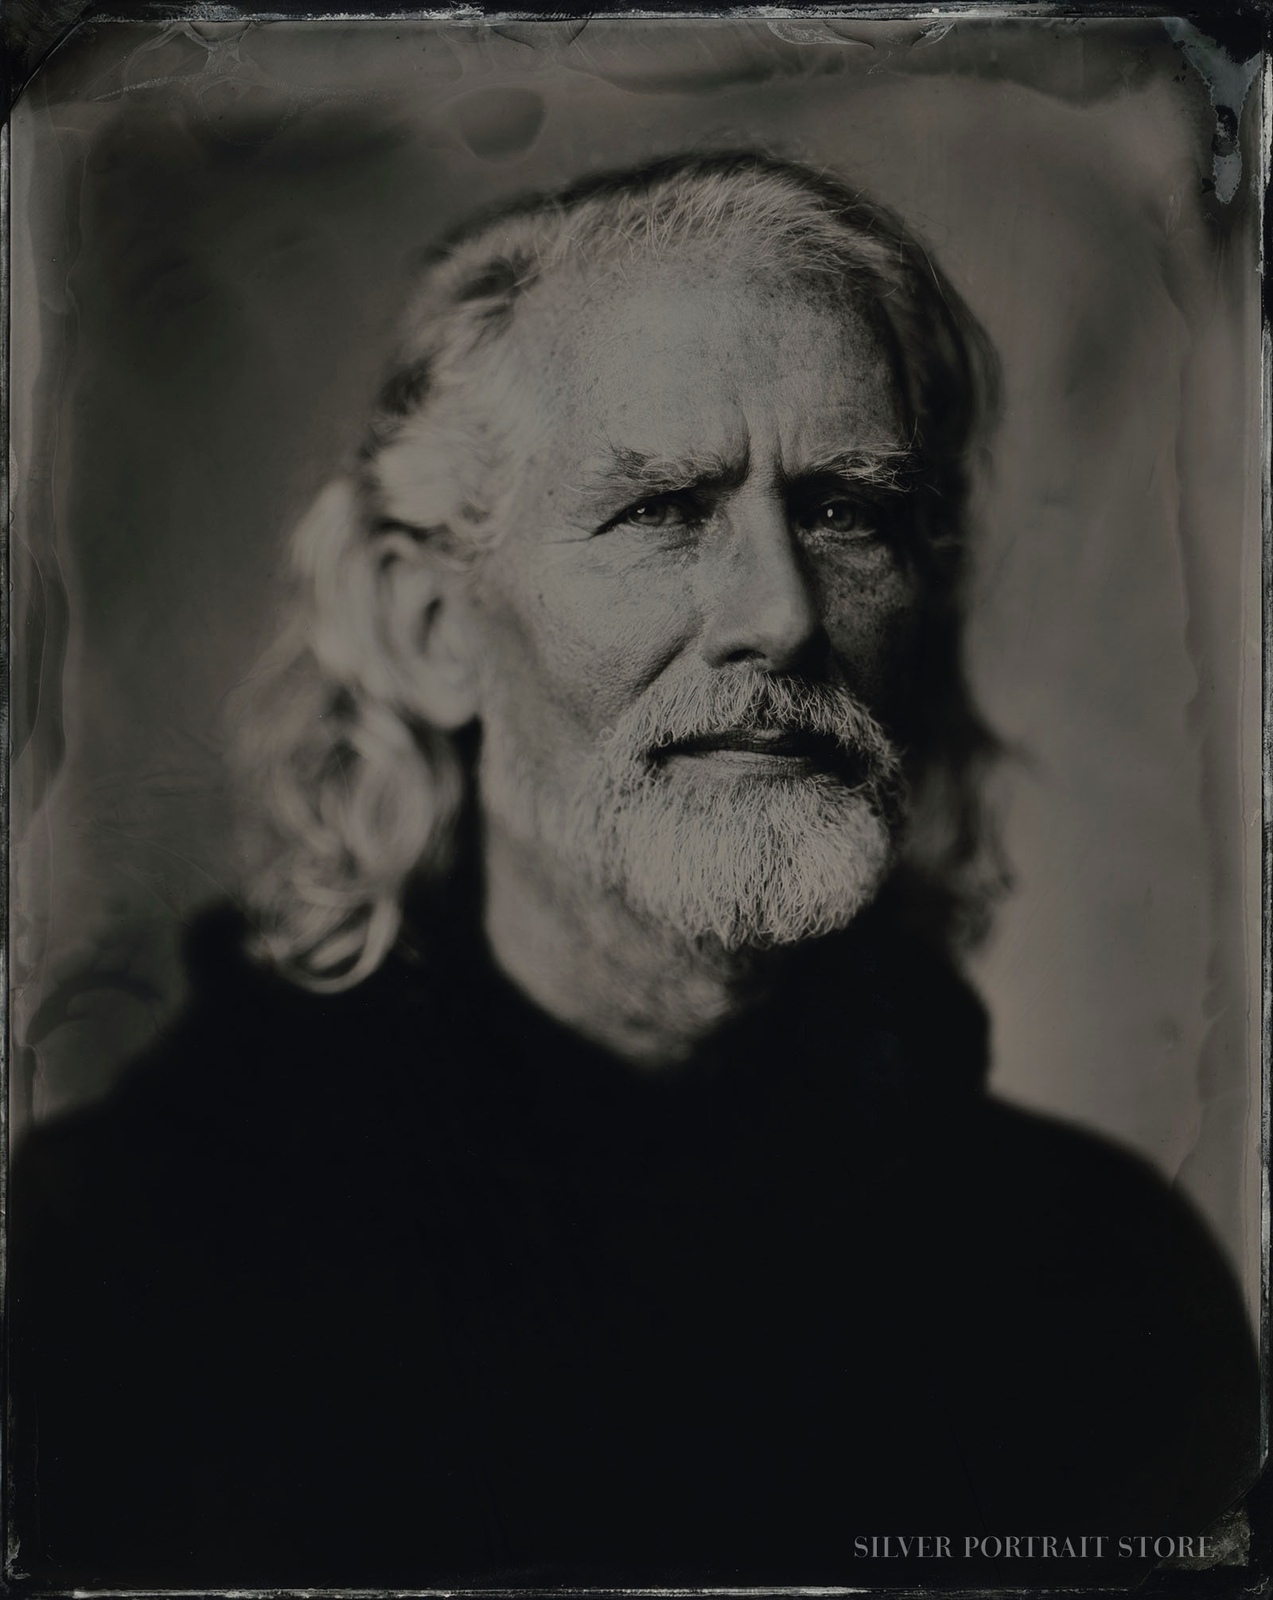 Henk Hoekstra-Silver Portrait Store-Wet plate collodion-Black glass Ambrotype 20 x 25 cm.